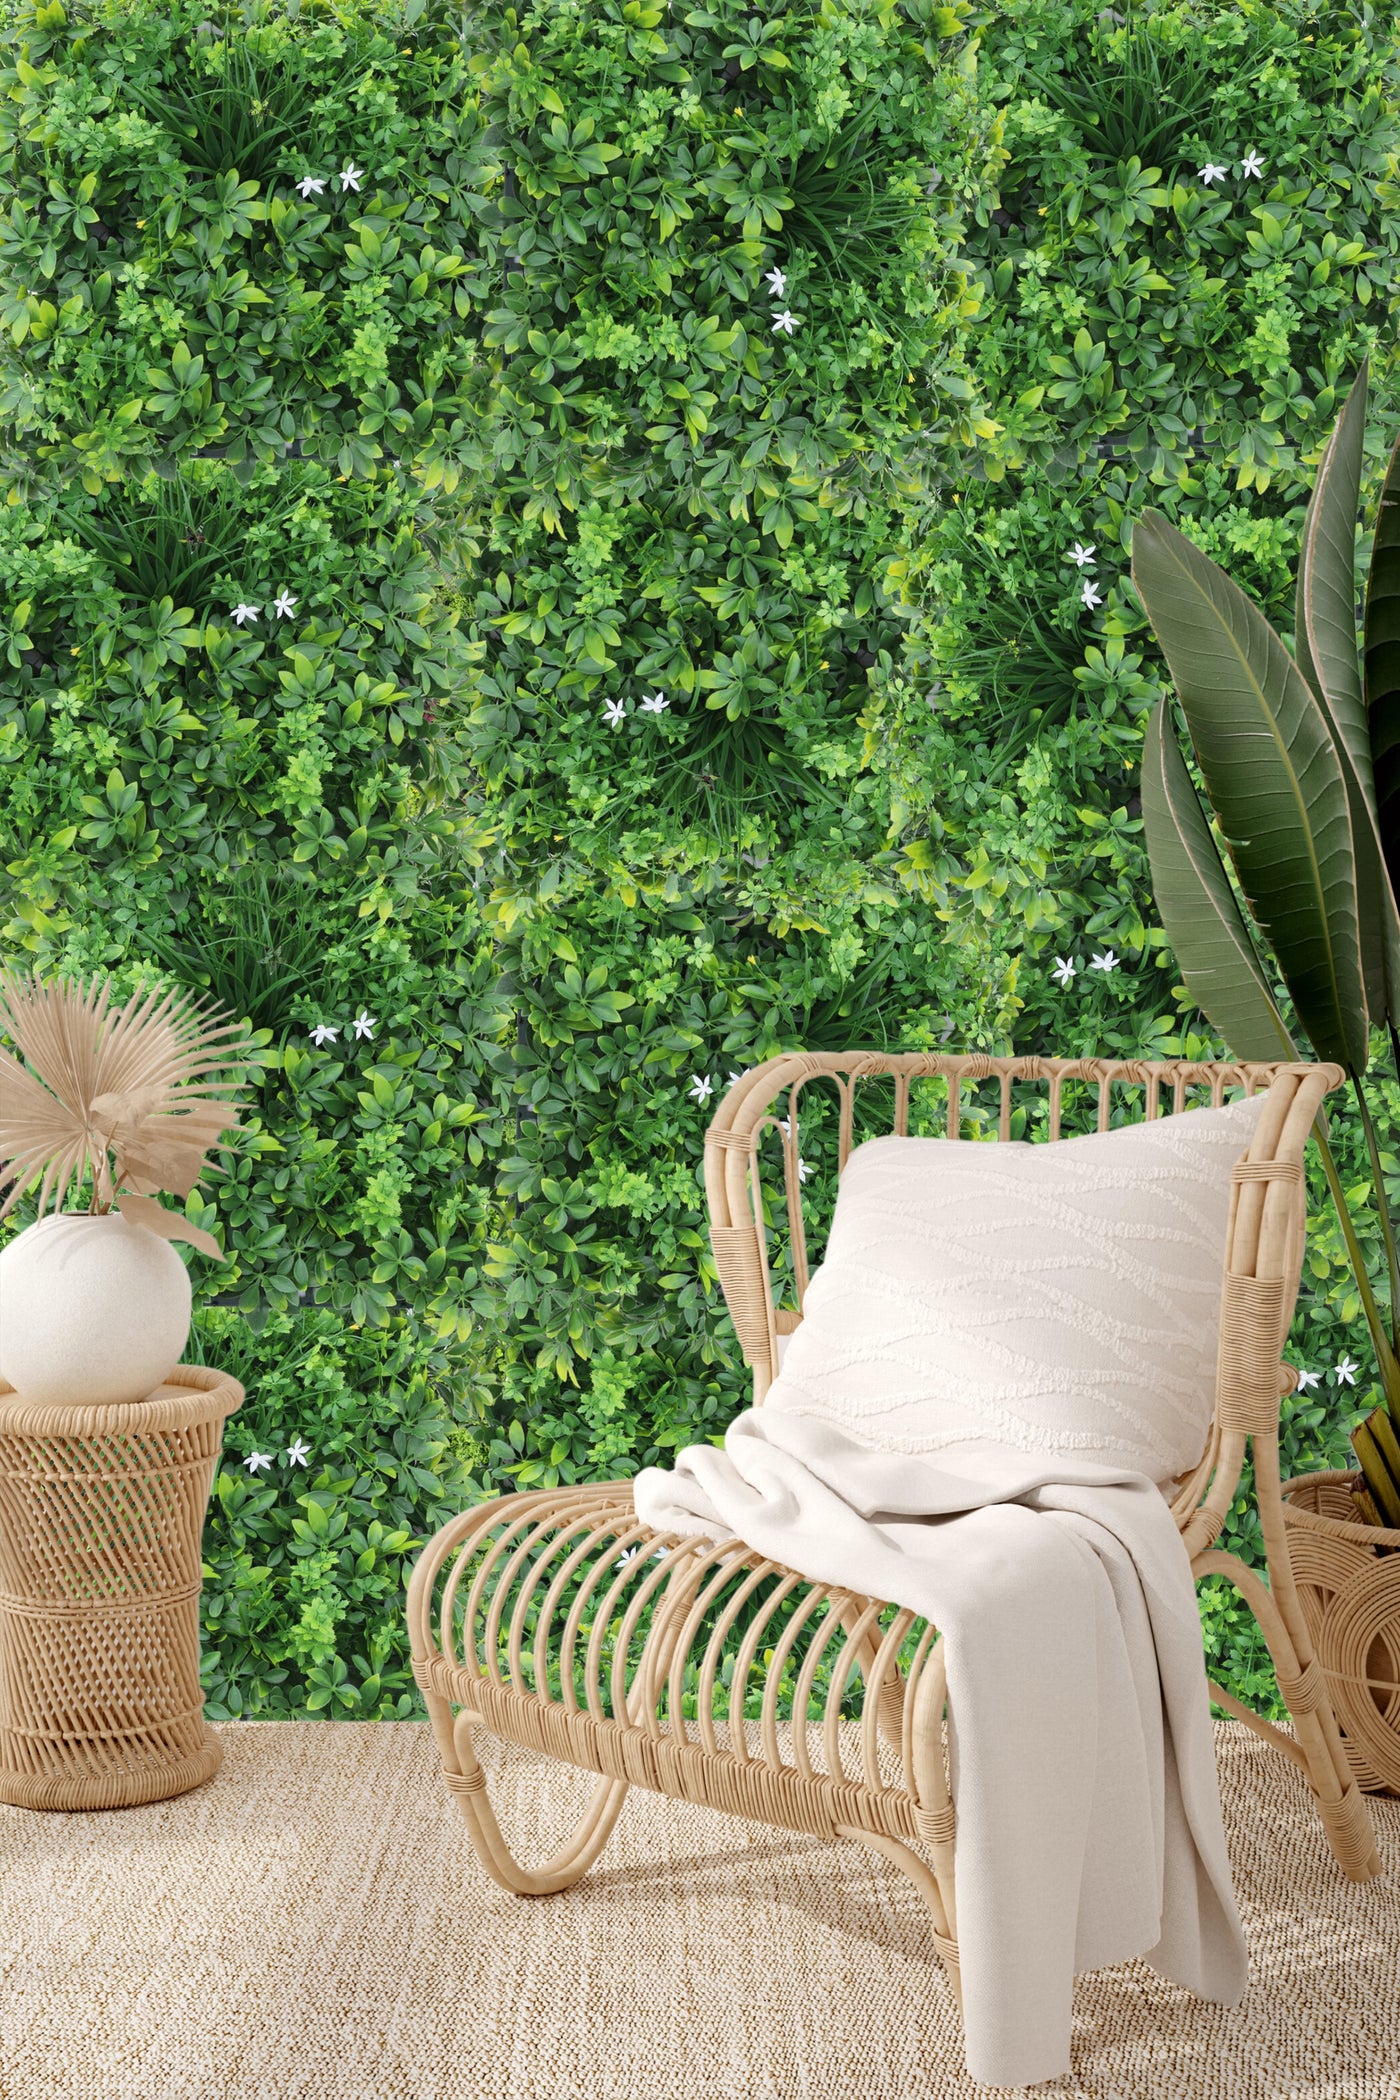 Luxury Flowering Artificial Green Leaves Vertical Garden Wall Tile (Pack of 1)